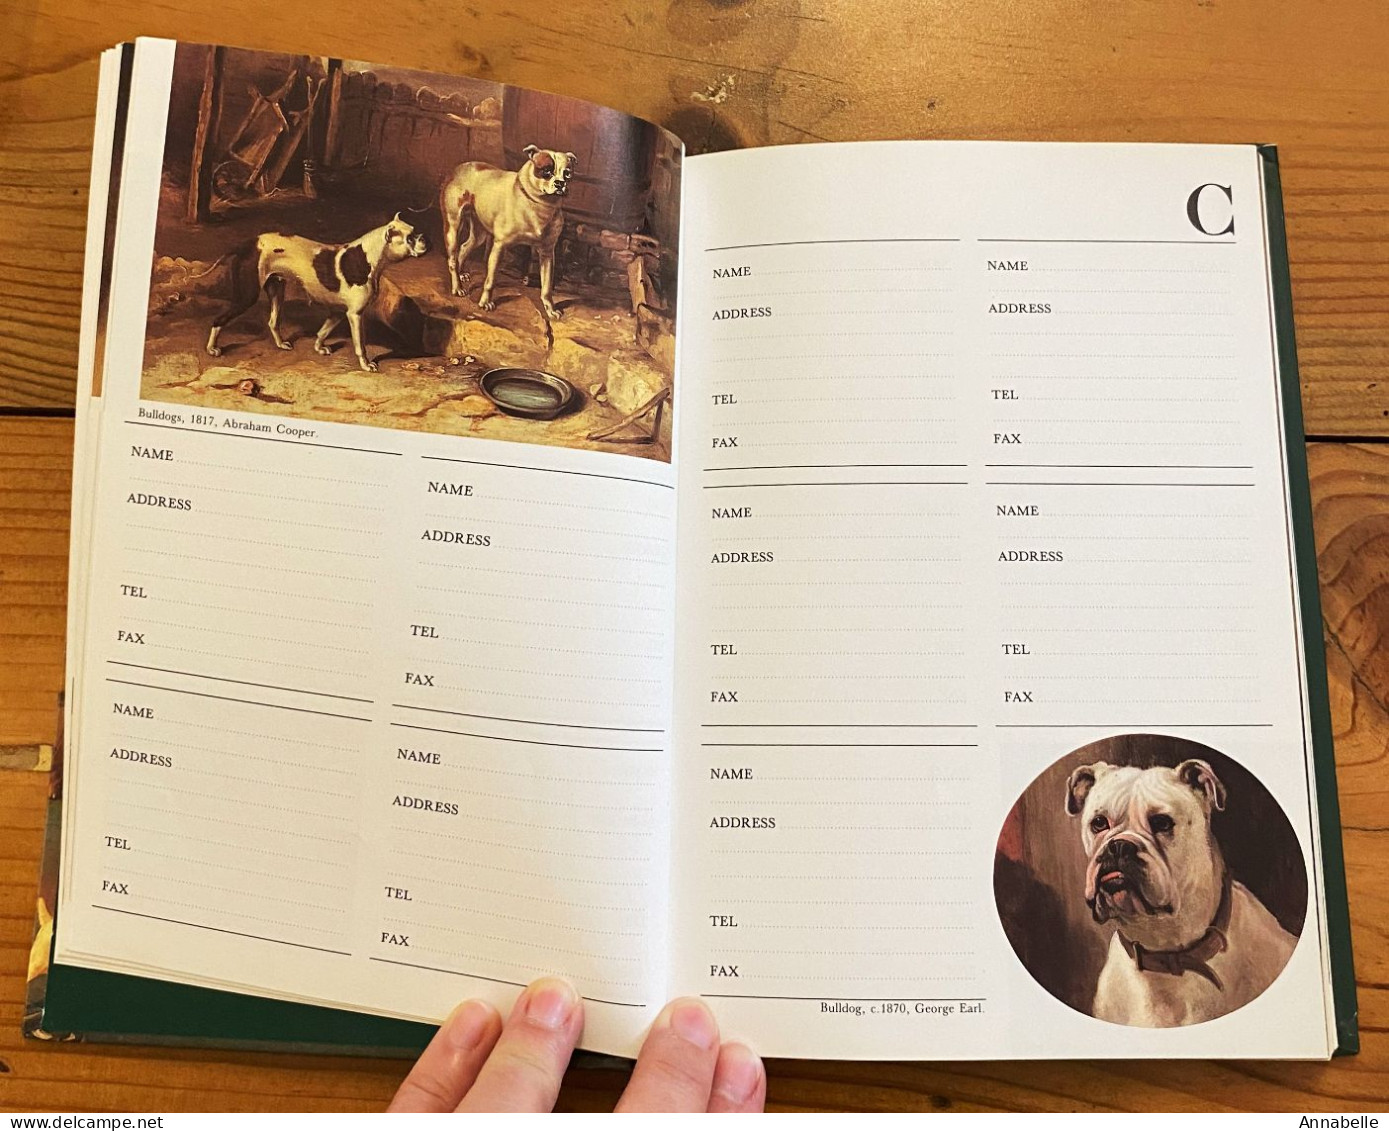 Address Book (1996) - Pet/ Animal Care